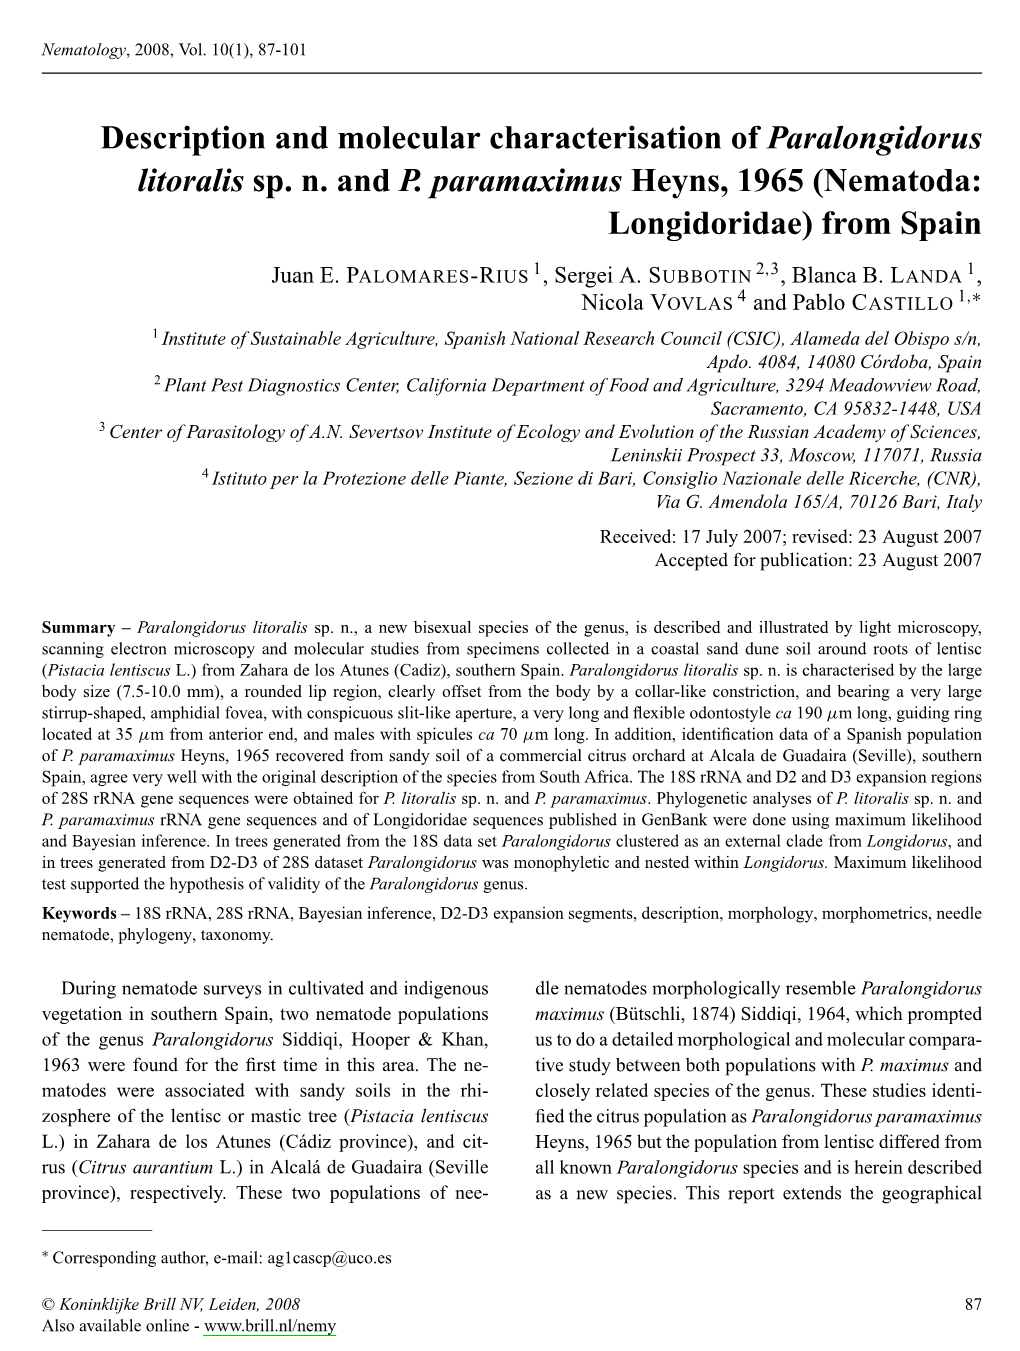 Description and Molecular Characterisation of Paralongidorus Litoralis Sp.N.Andp